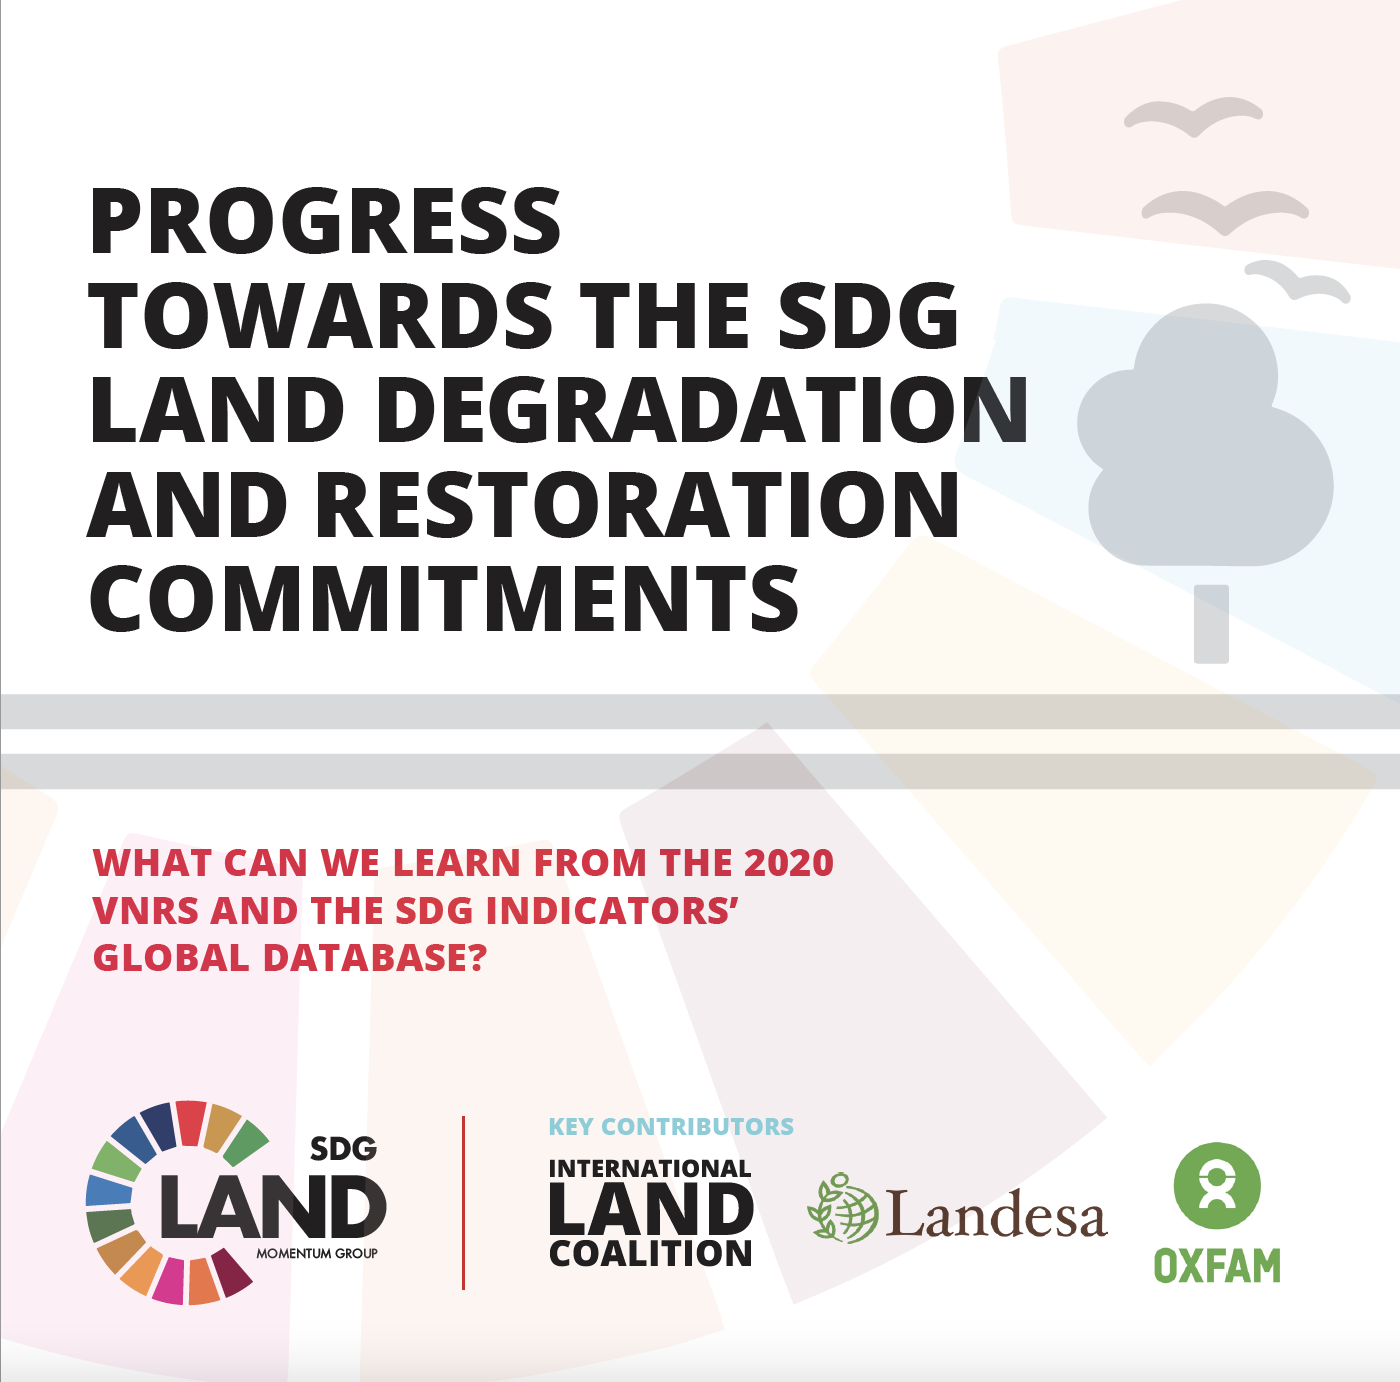 PROGRESS TOWARDS THE SDG LAND DEGRADATION AND RESTORATION COMMITMENTS